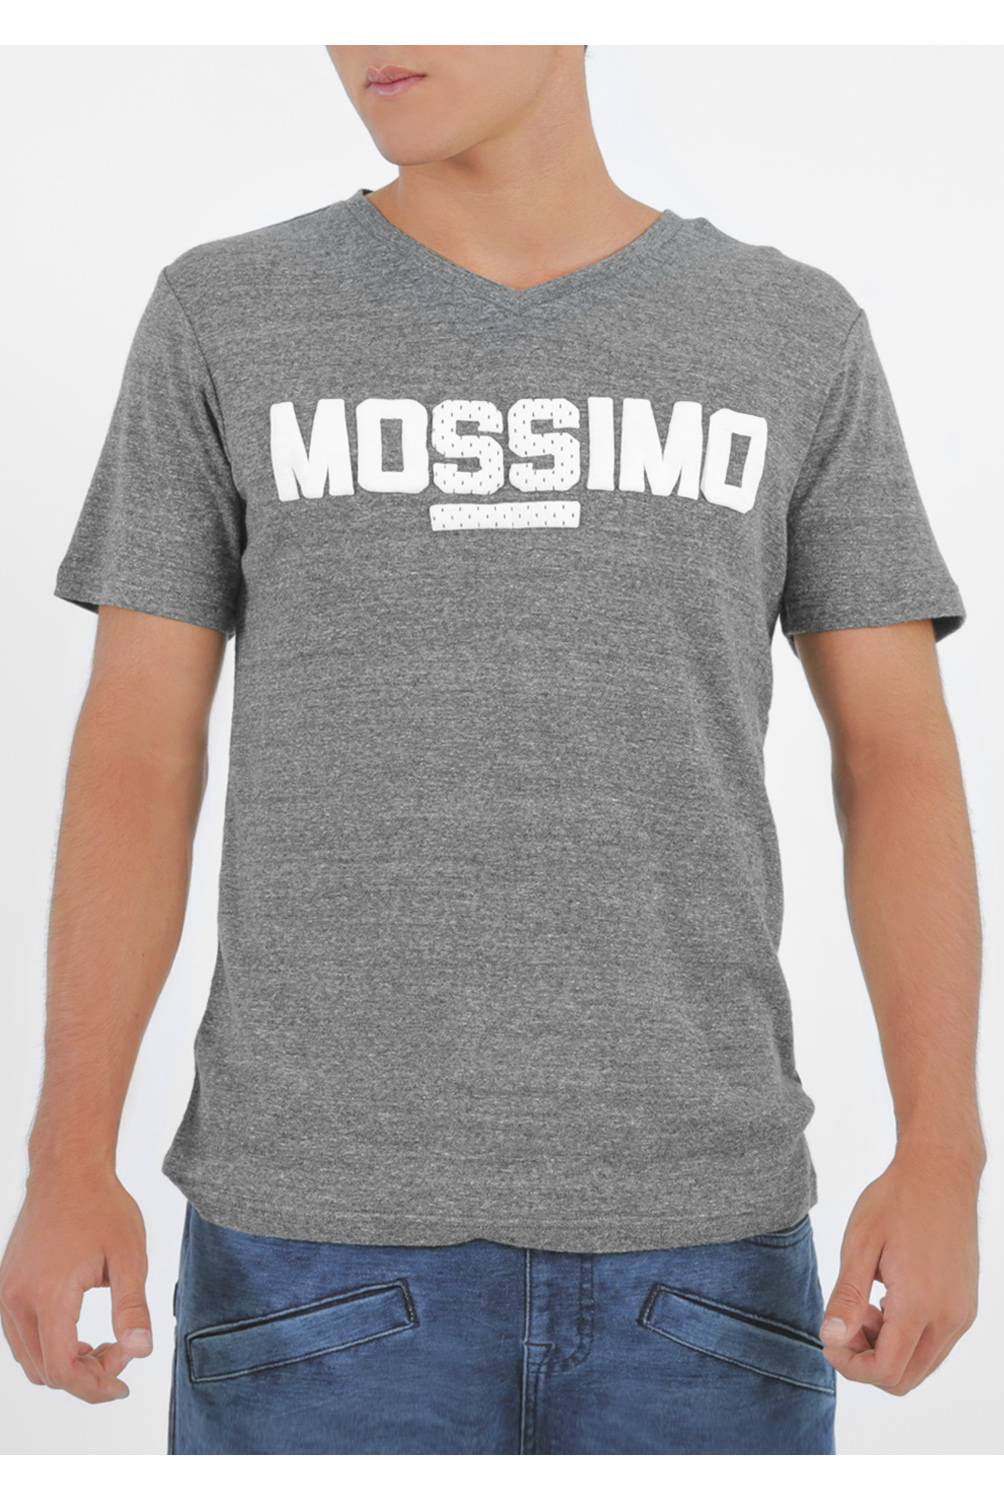 MOSSIMO - Polo Hombre TSV SPORT1 W17